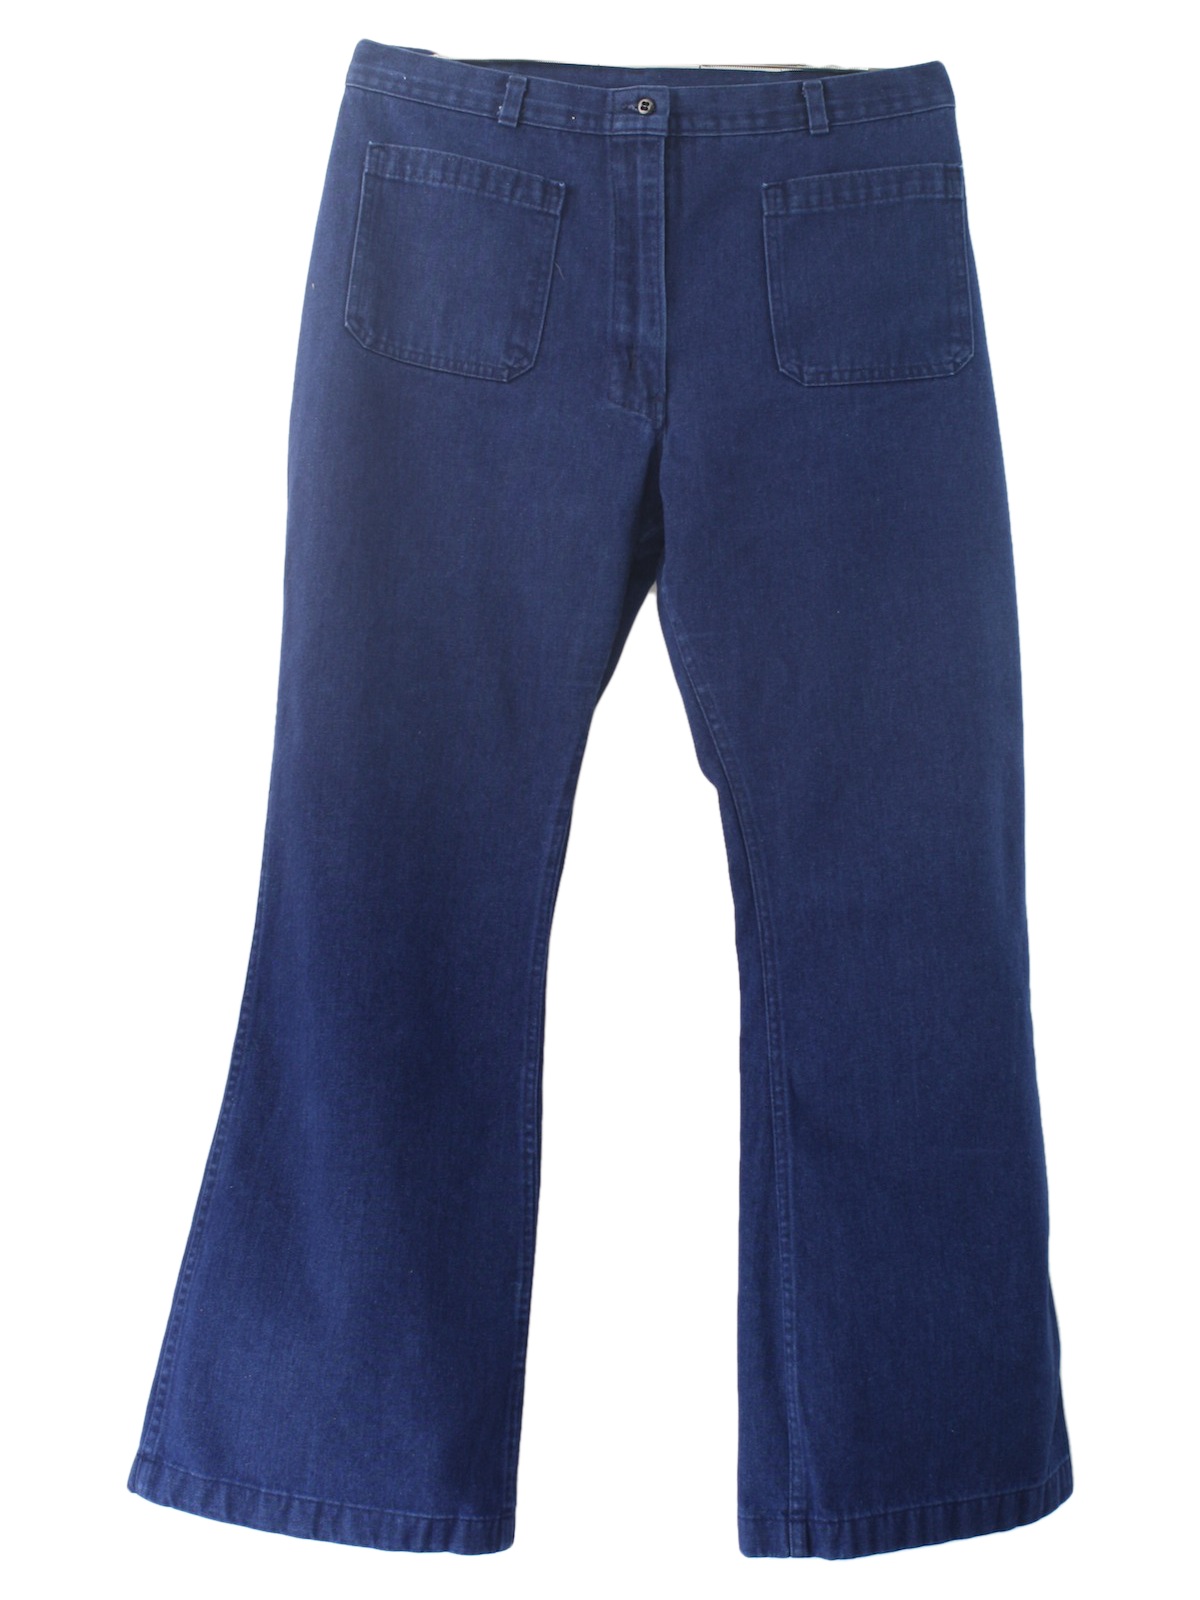 1980s Vintage Bellbottom Pants: 80s -Missing Label- Womens dark blue ...